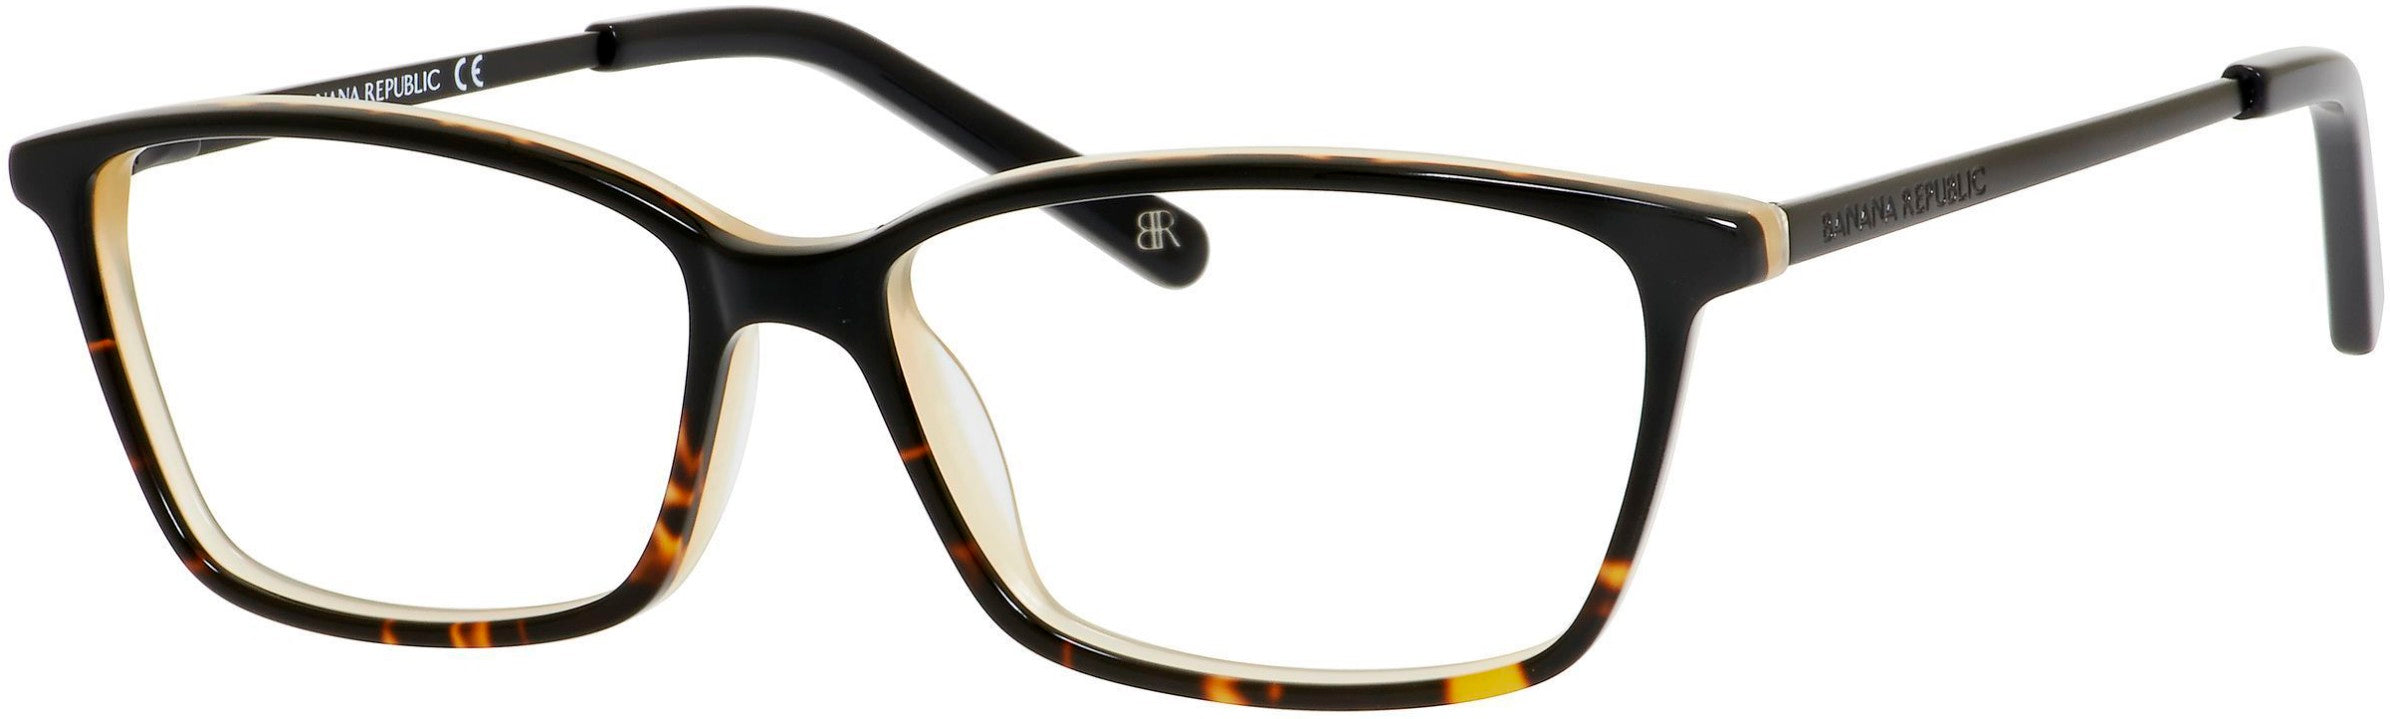 Banana Republic Cate/N Rectangular Eyeglasses 0WR7-0WR7  Black Havana (00 Demo Lens)